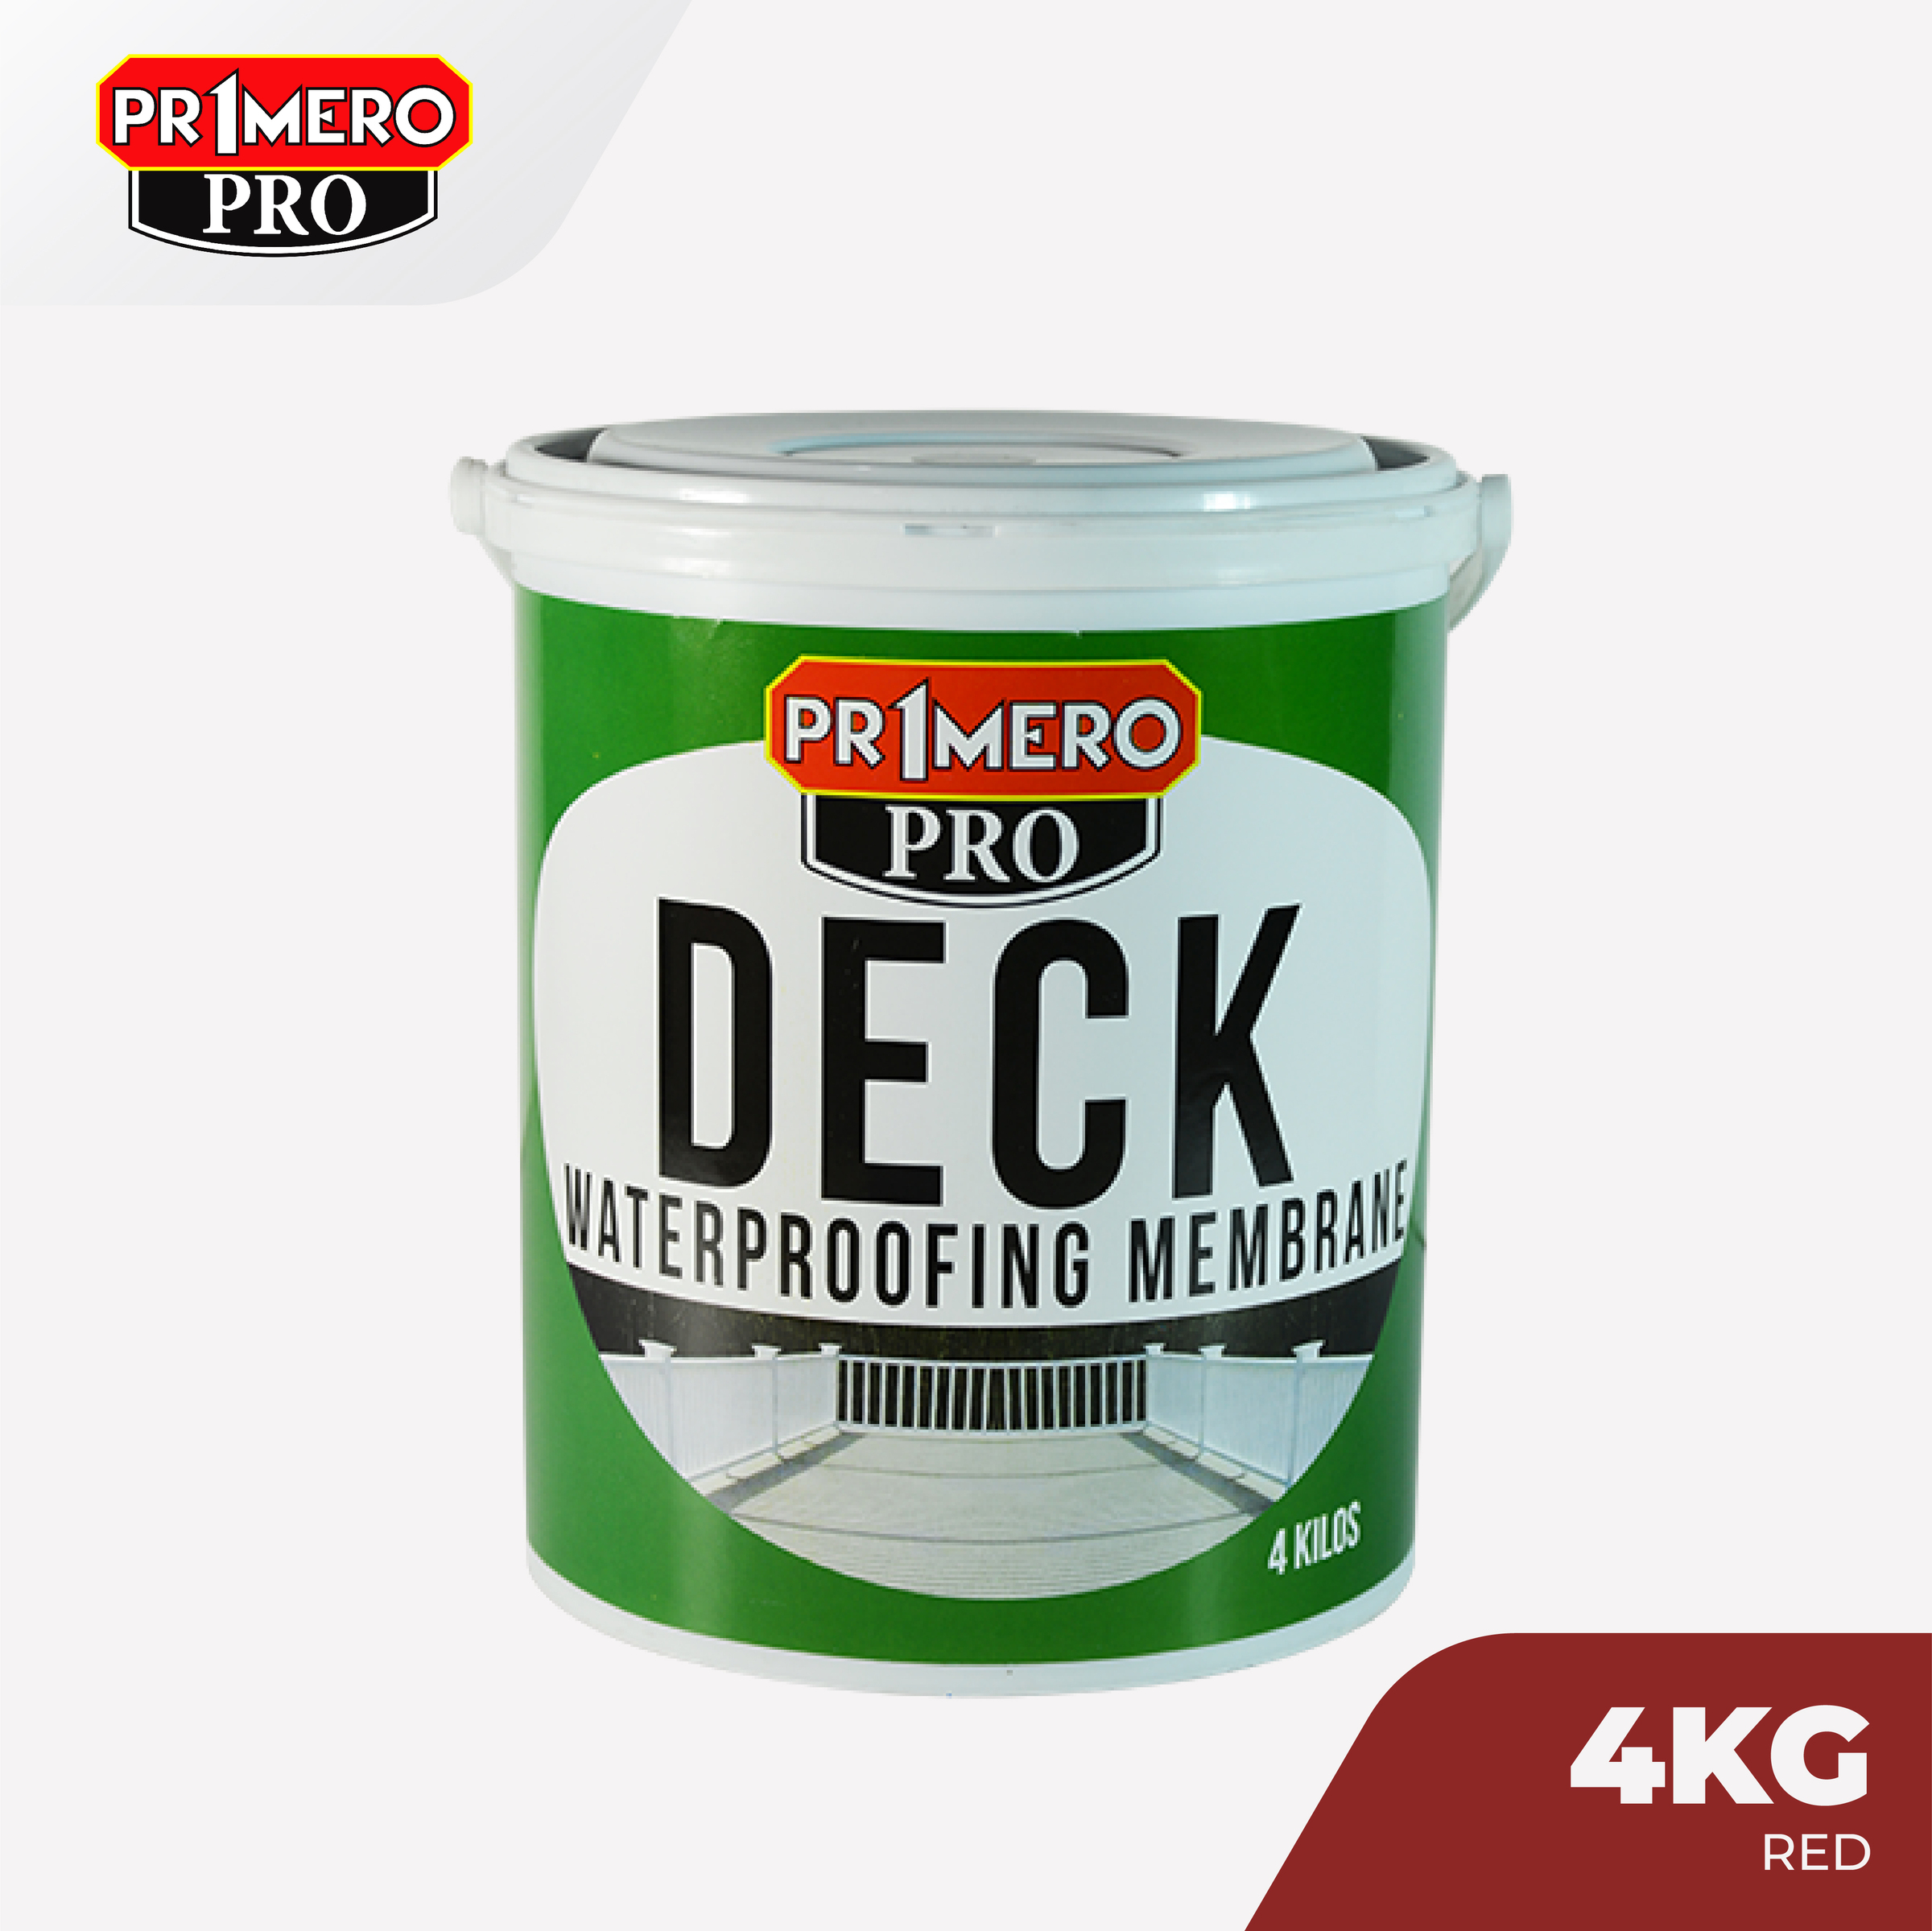 Primero Pro Deck Waterproofing Membrane Red - 4kg